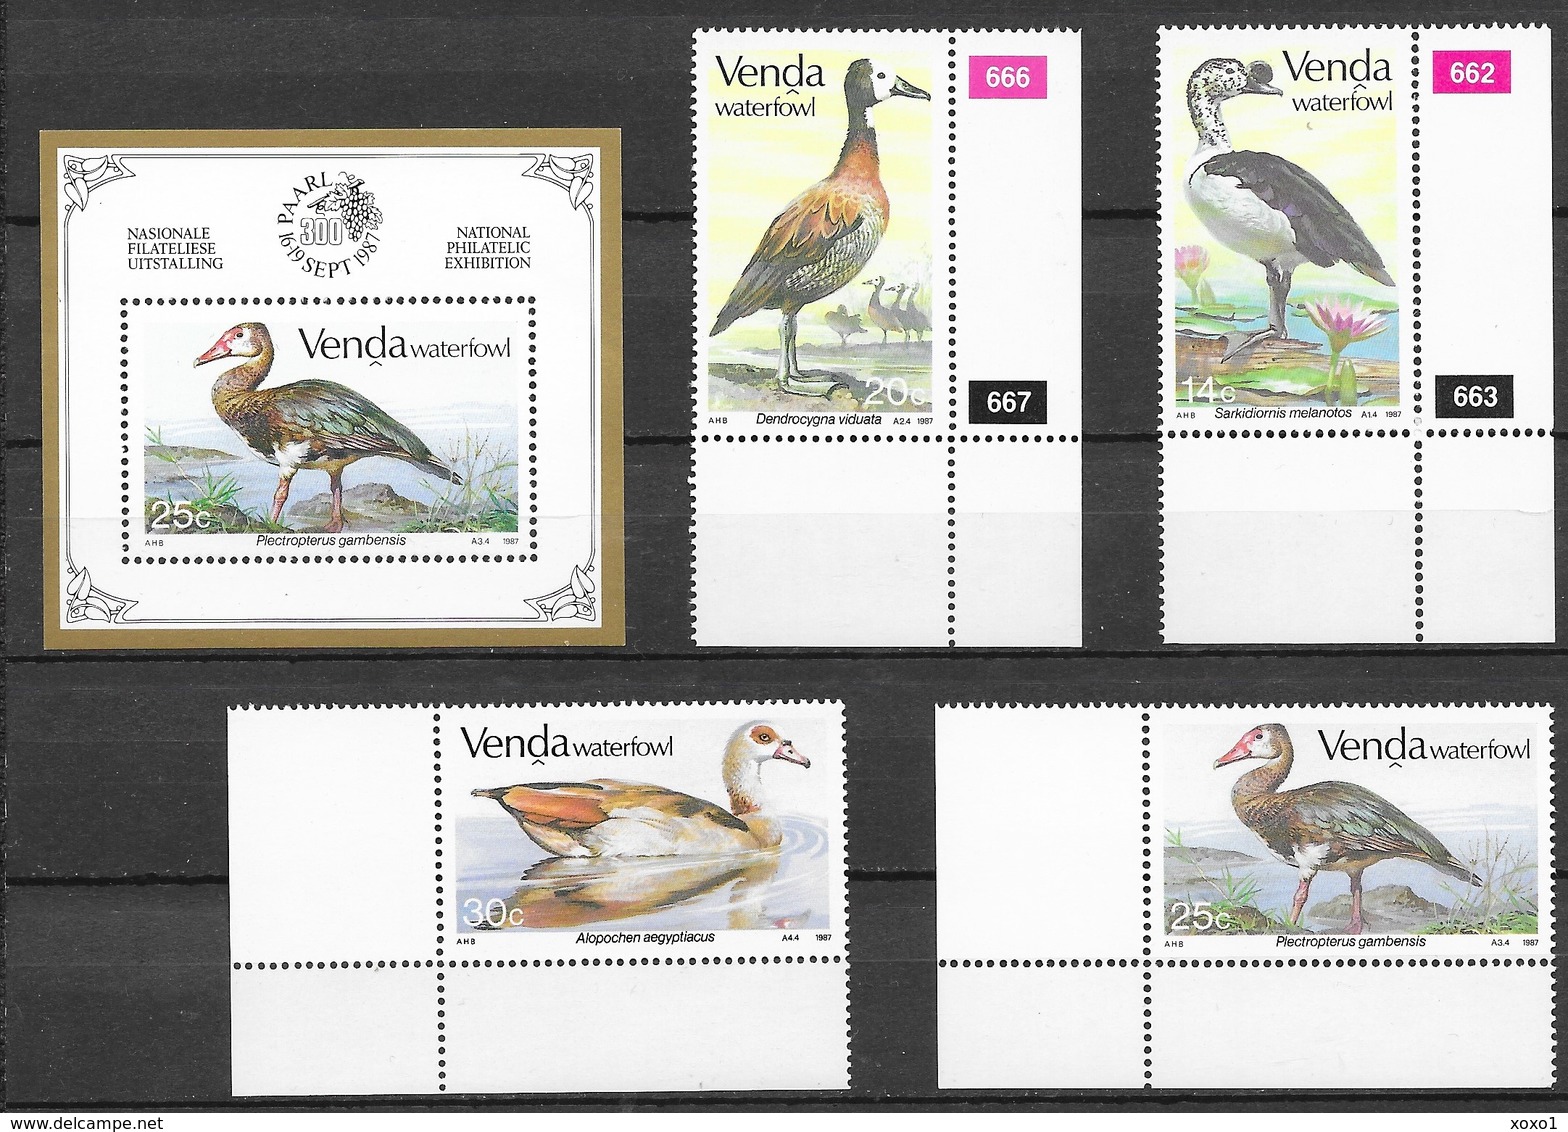 Venda South Africa 1987 MiNr. 150 - 153 (Block 3) Birds Geese 4v+1bl MNH**  15.50 € - Oche